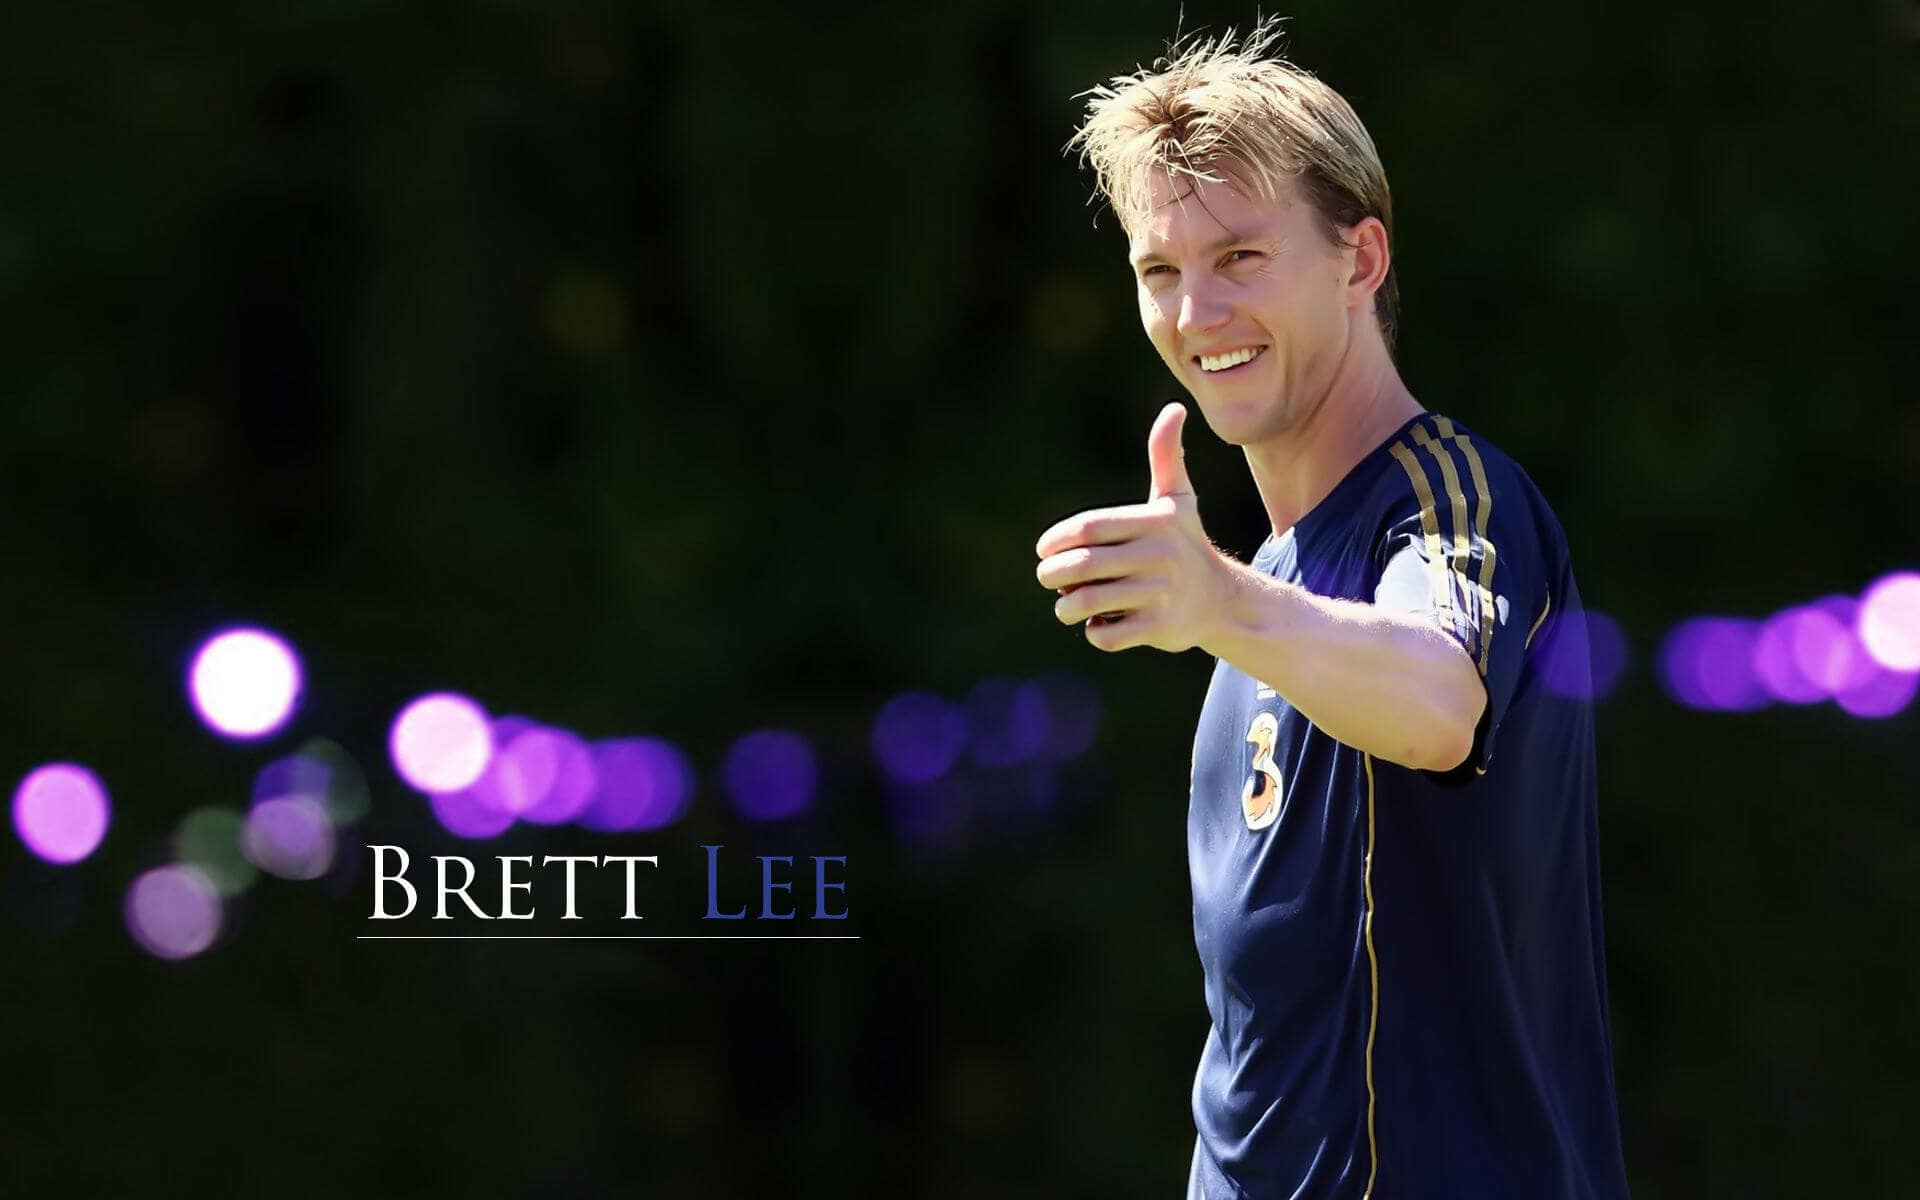 Ex-Australian Cricketer Brett Lee Donates 1 Bitcoin to Help India Fight COVID-19